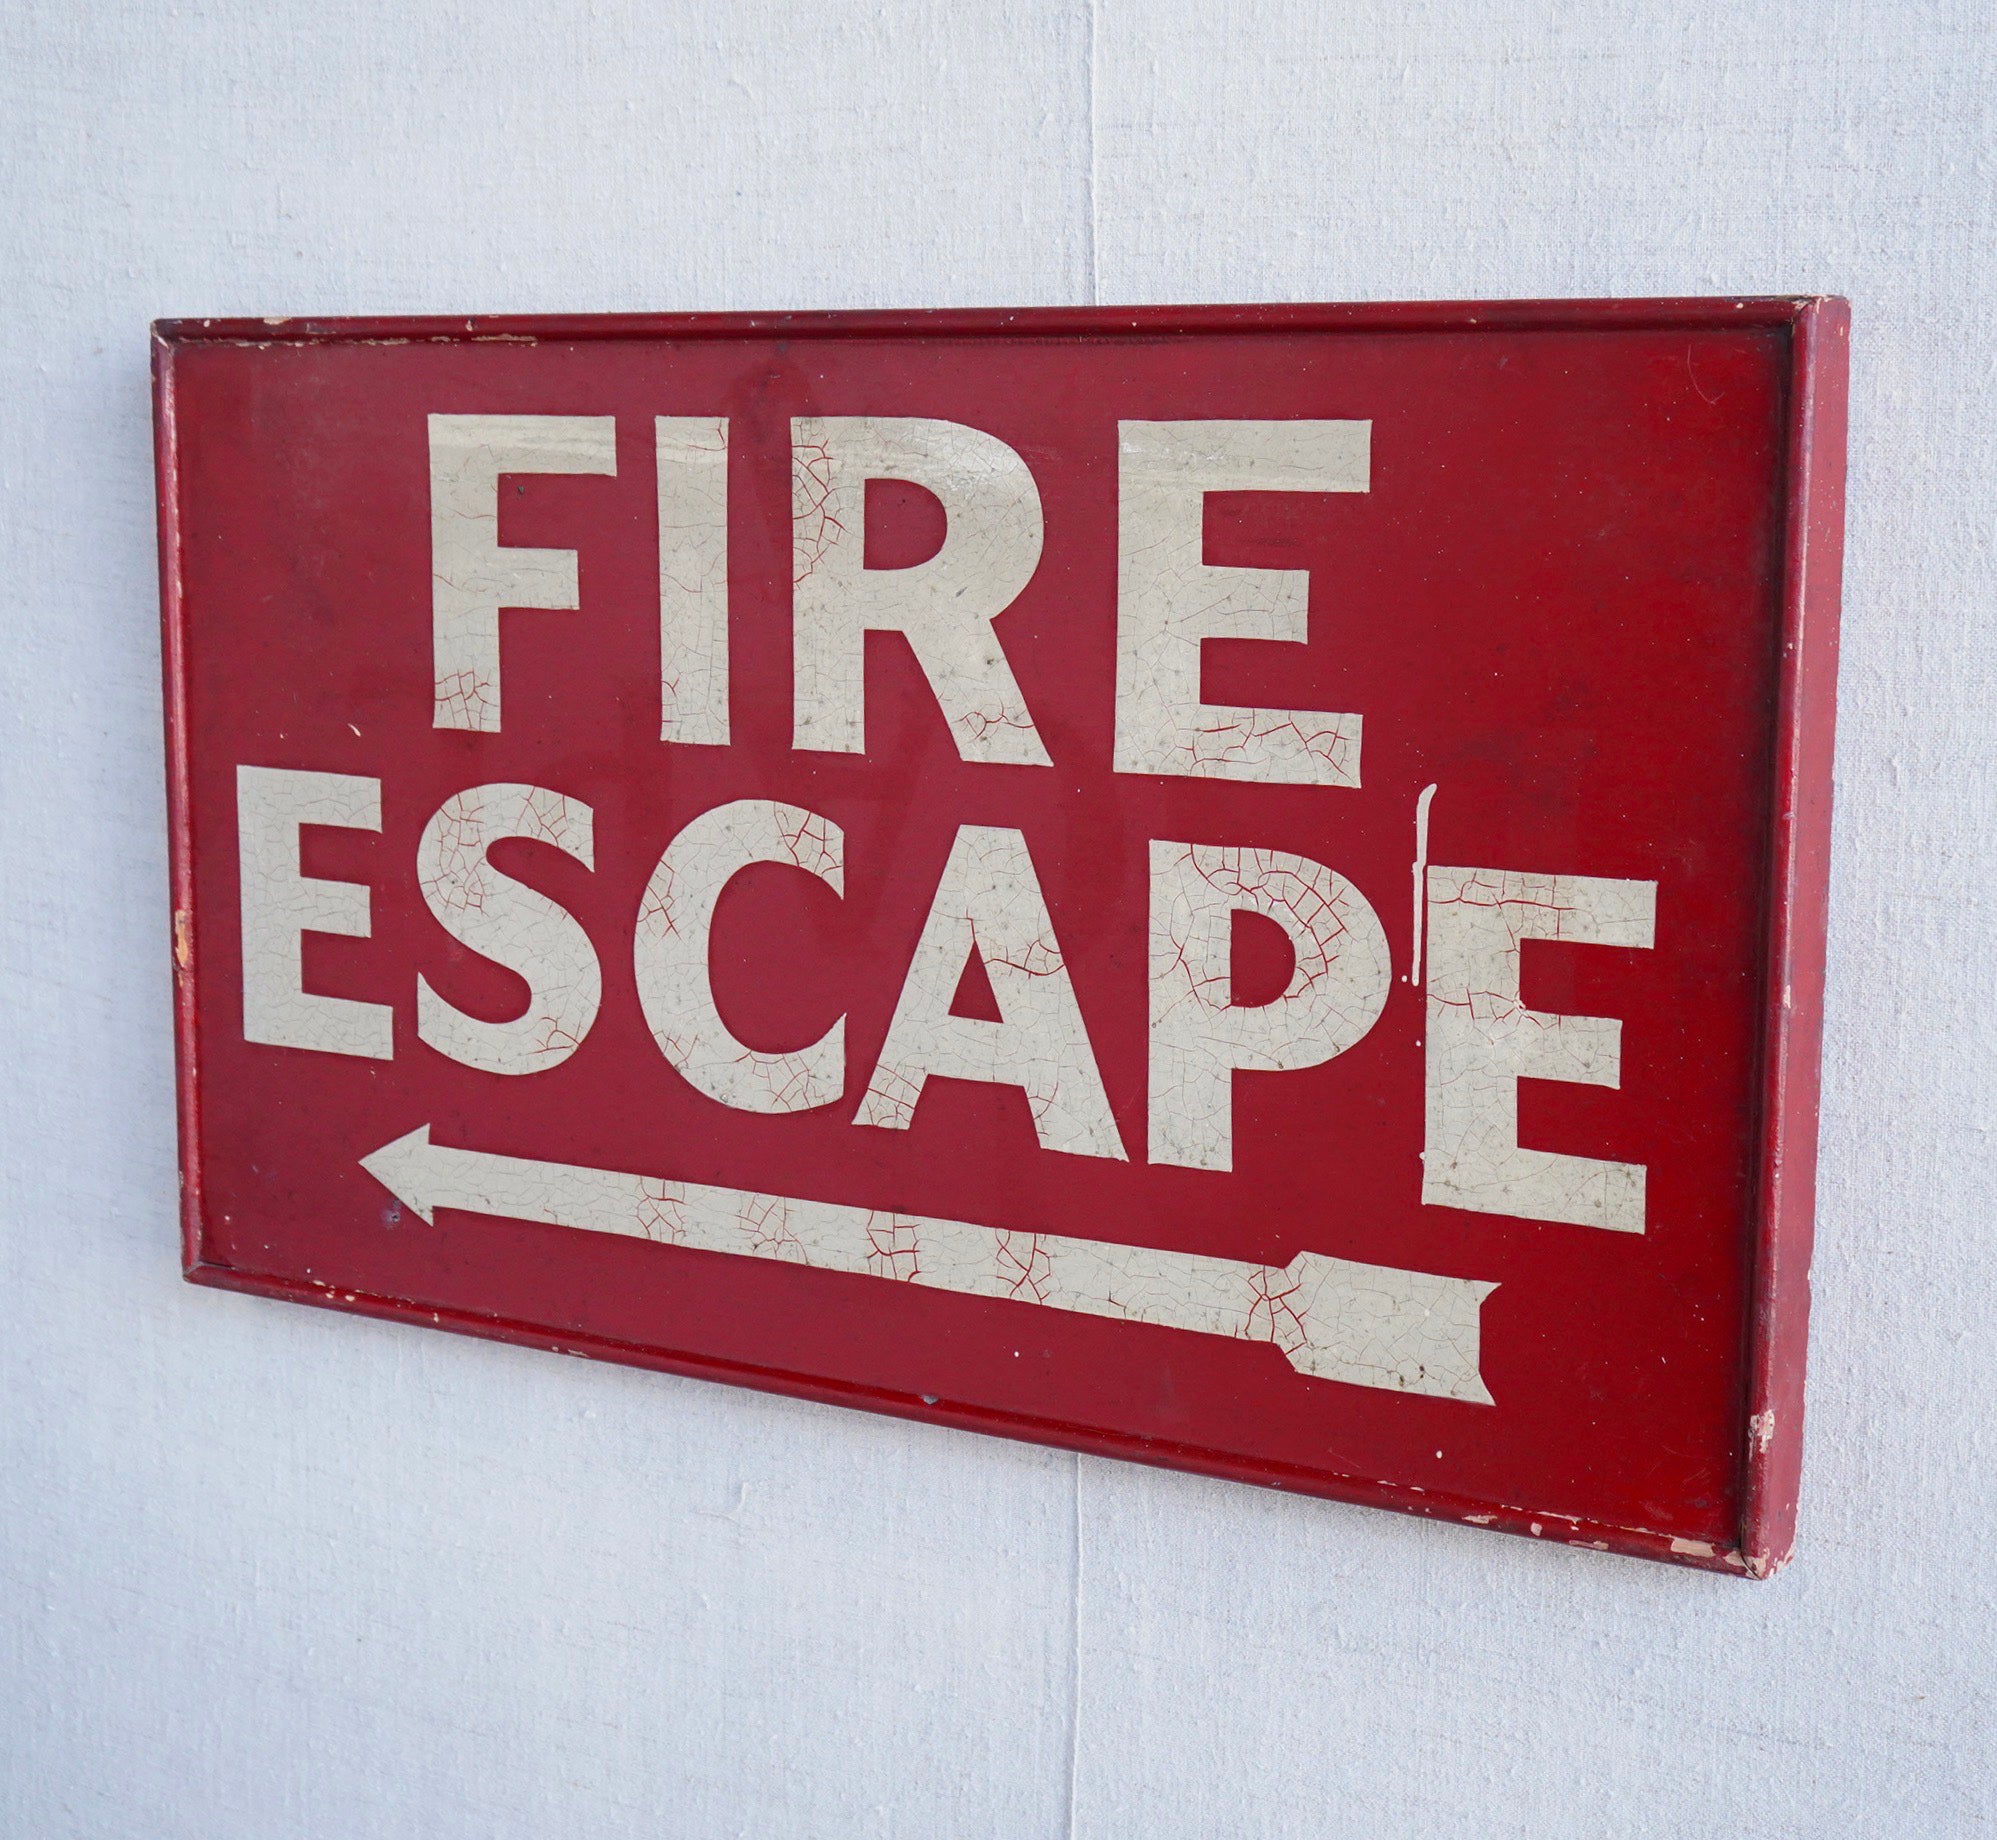 Fire Escape Sign